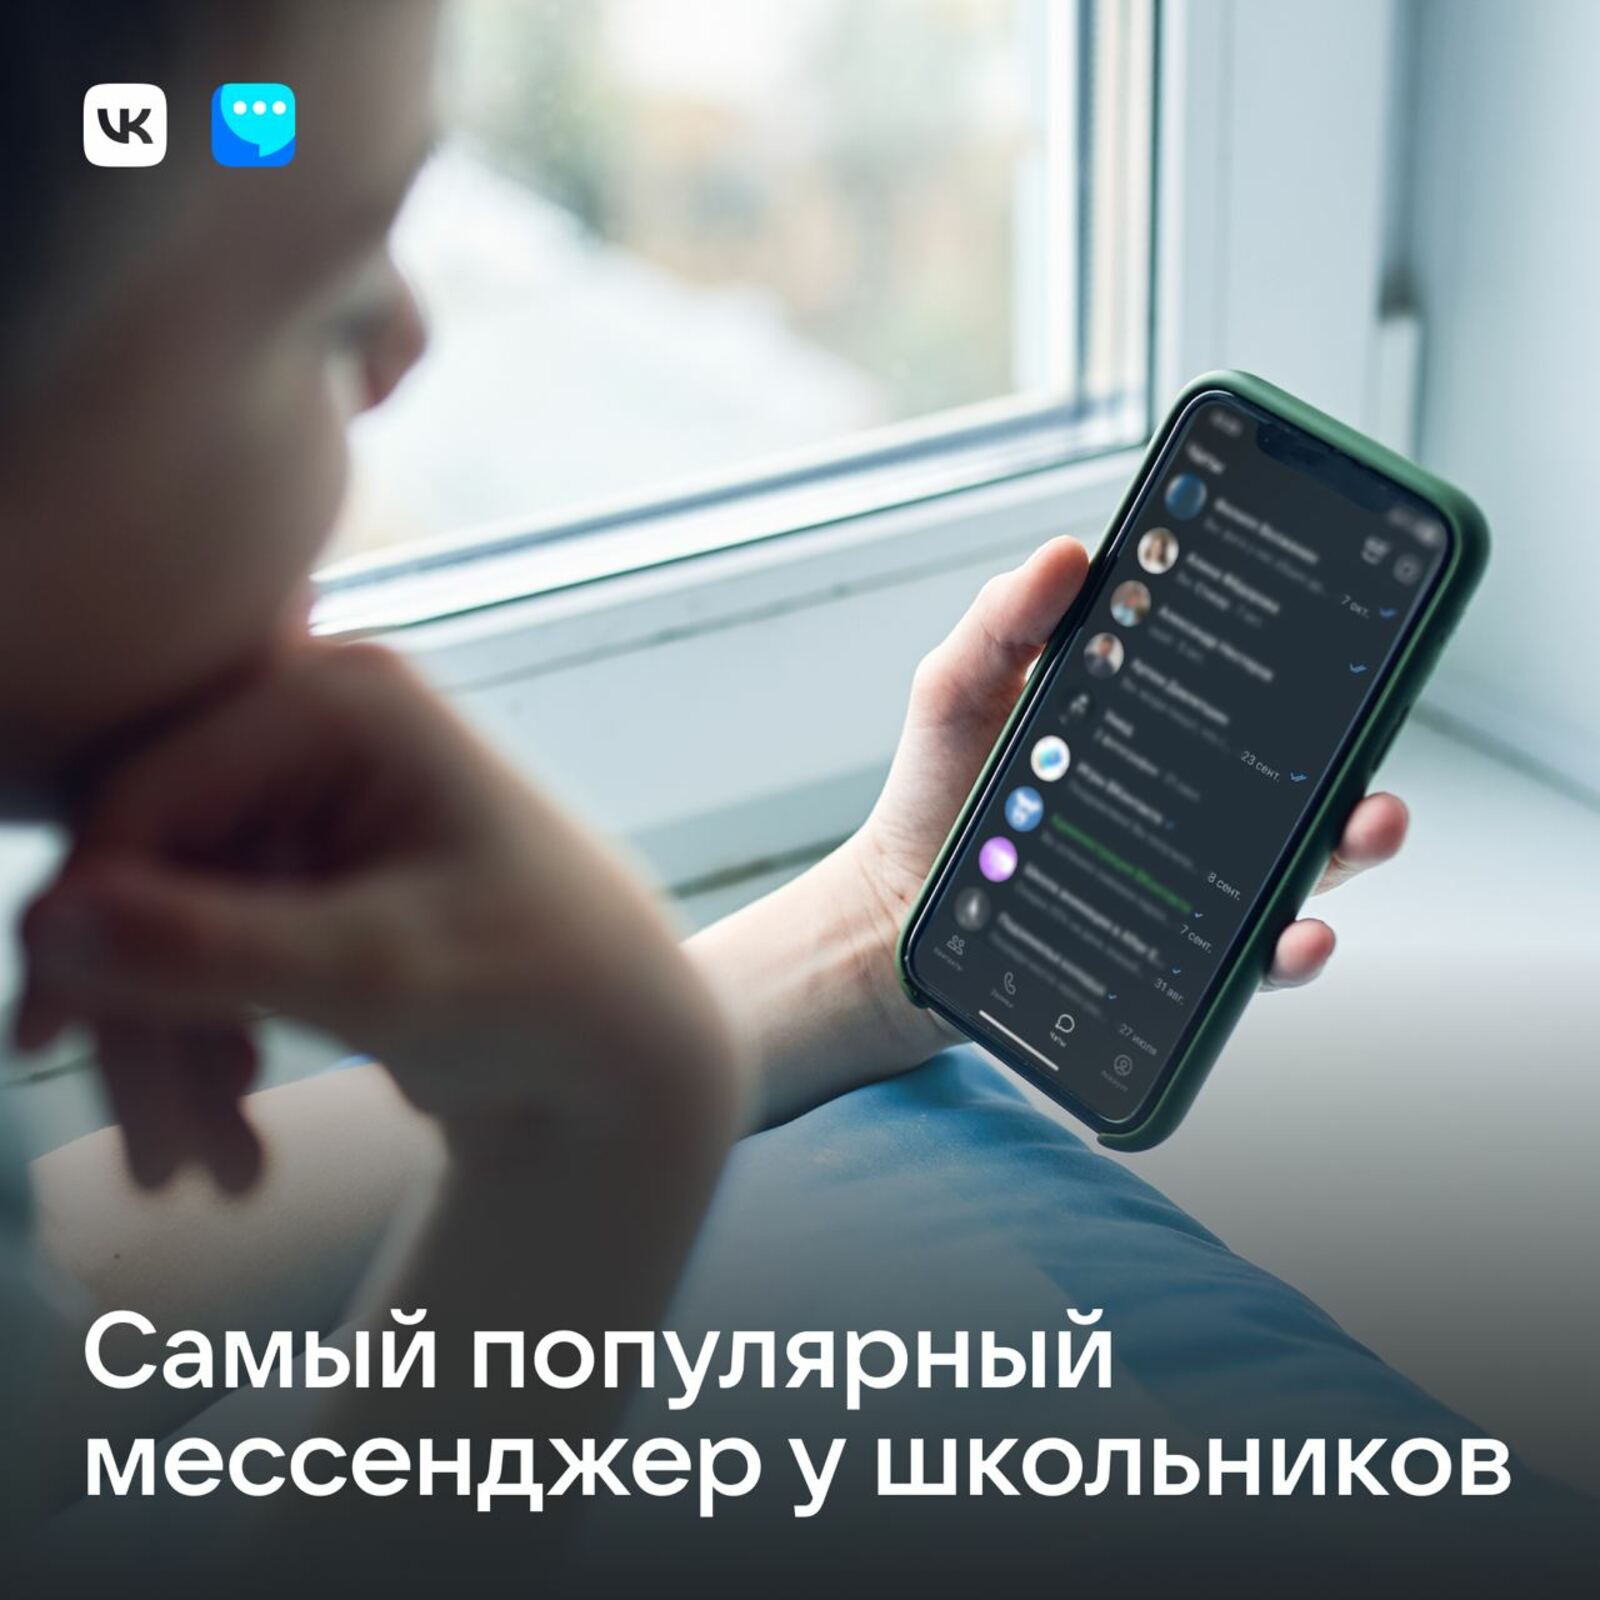 “ВКонтакте” селтәрендә ултырыуы ҡыҙыҡ икән!”